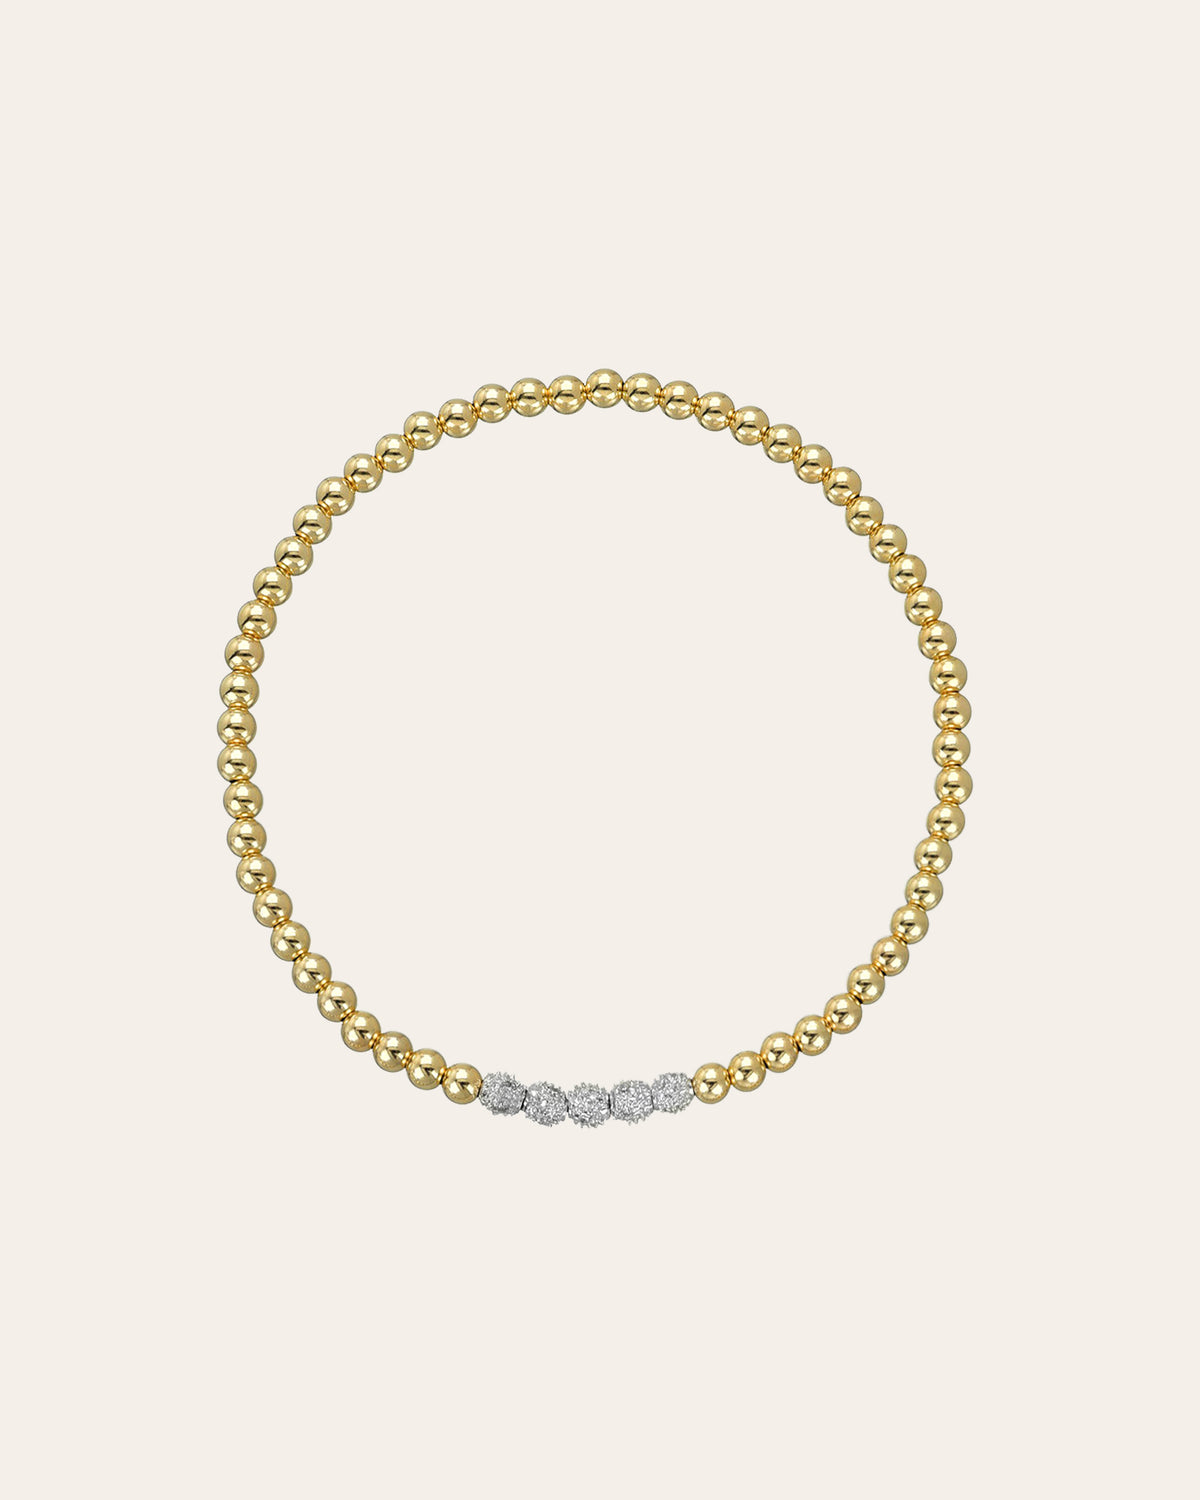 3mm Gold Bead Bracelet with Multi Diamond Beads